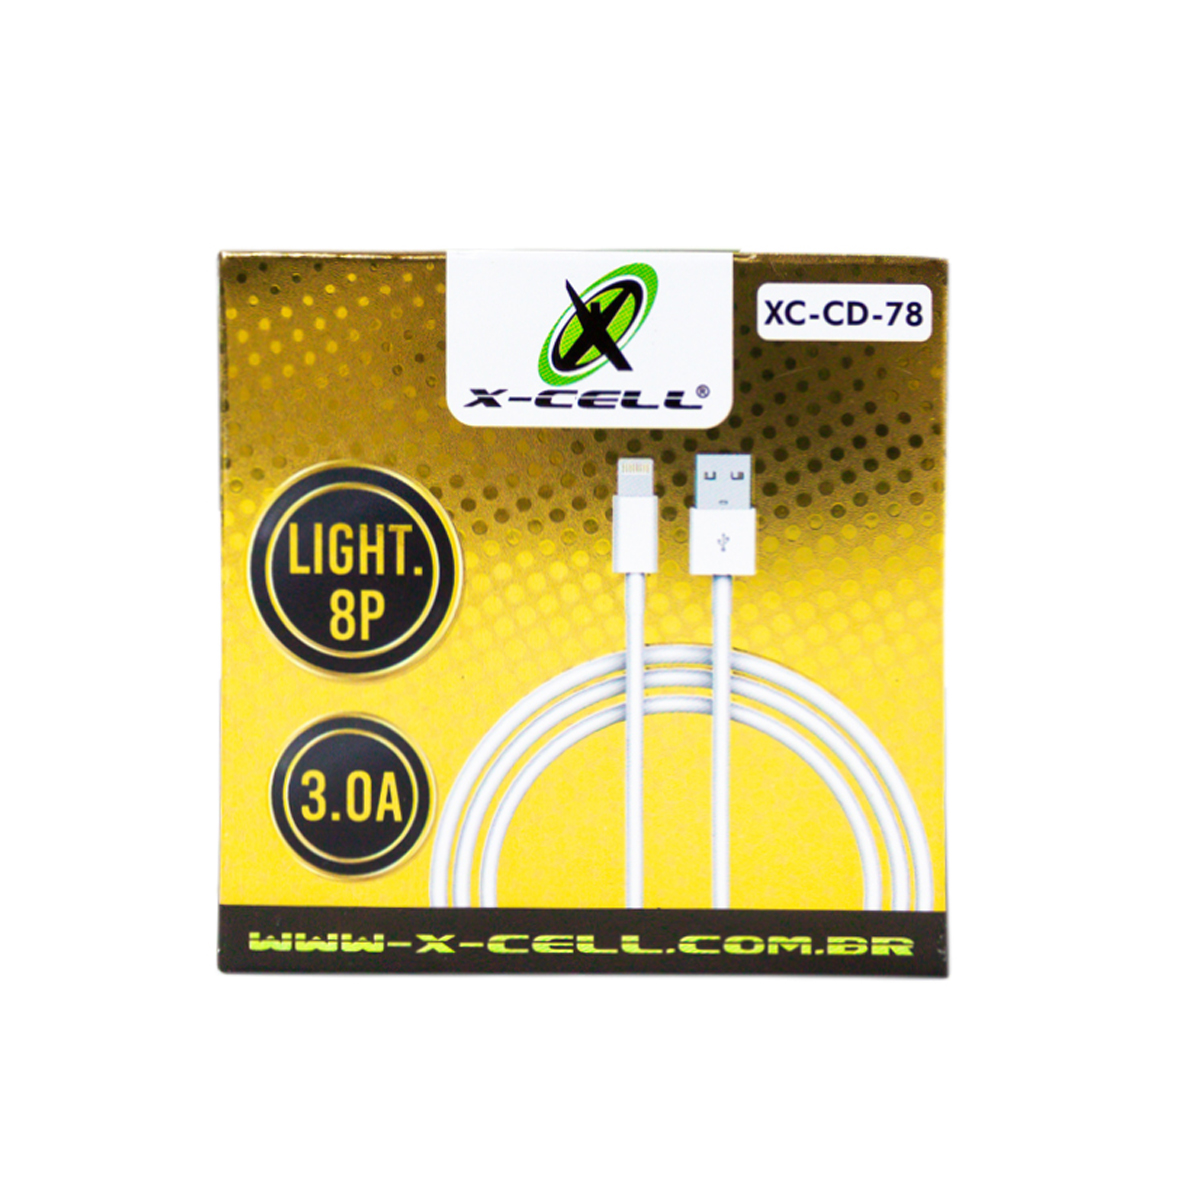 7908417100081 - CABO DE DADOS USB LIGHT 8P 3.01A 1.0M XC-CD-78 COMERCIAL BELLA